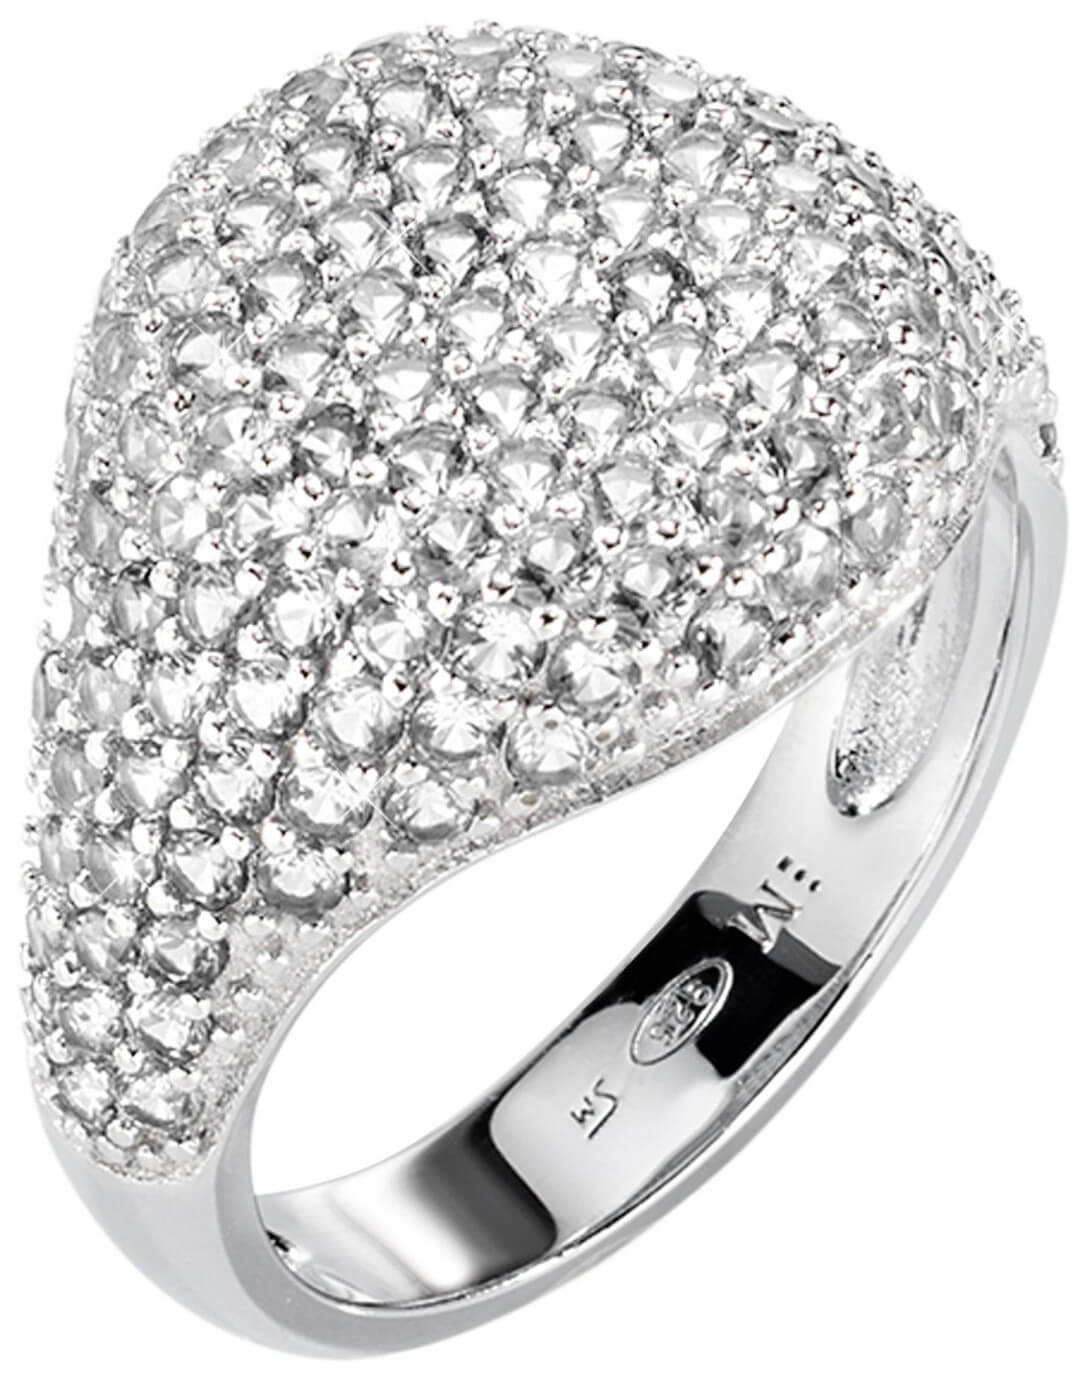 Morellato Luxusní třpytivý prsten ze stříbra Tesori SAIW65 58 mm.